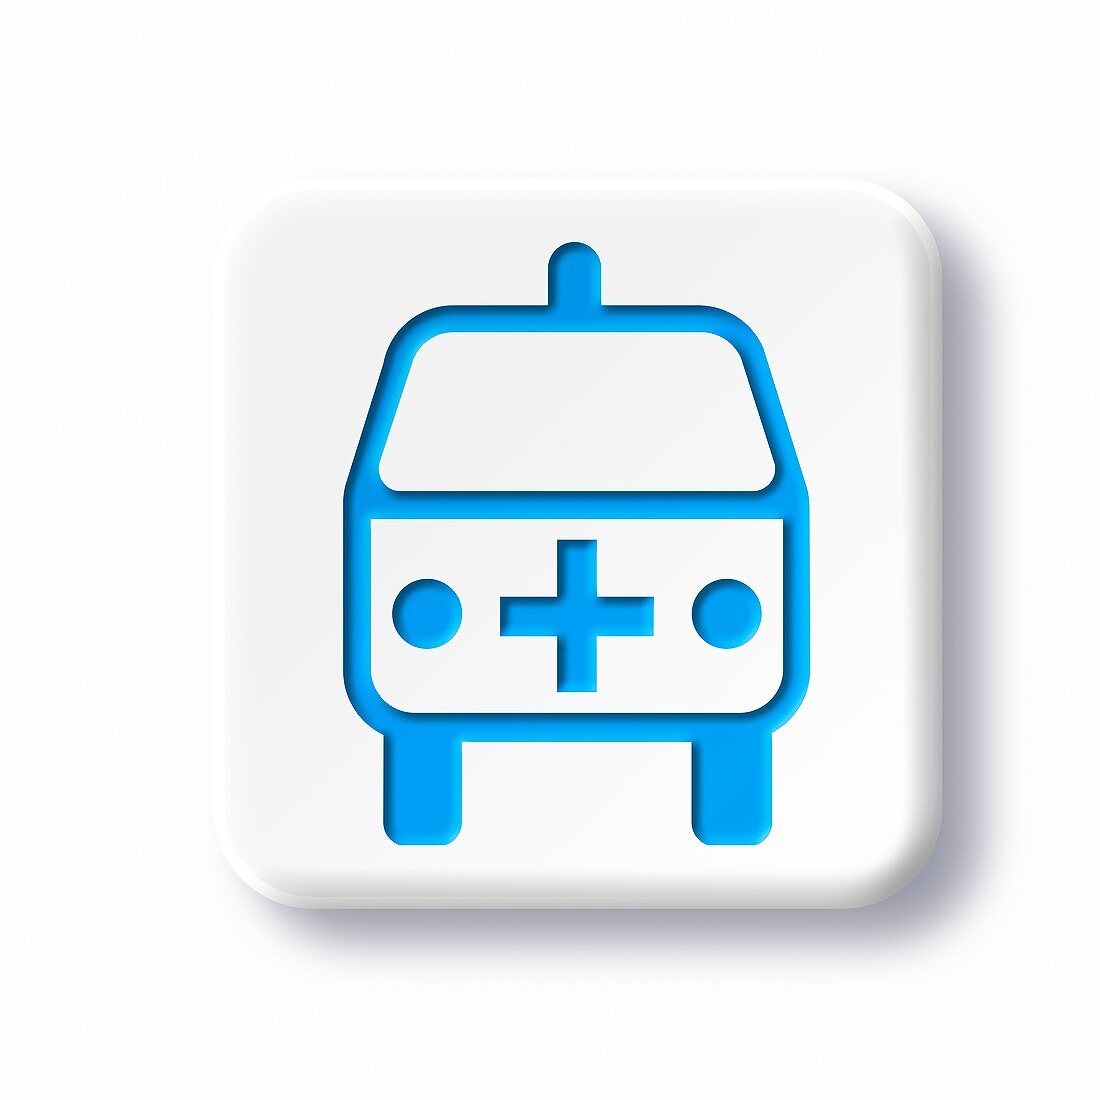 Ambulance symbol,artwork